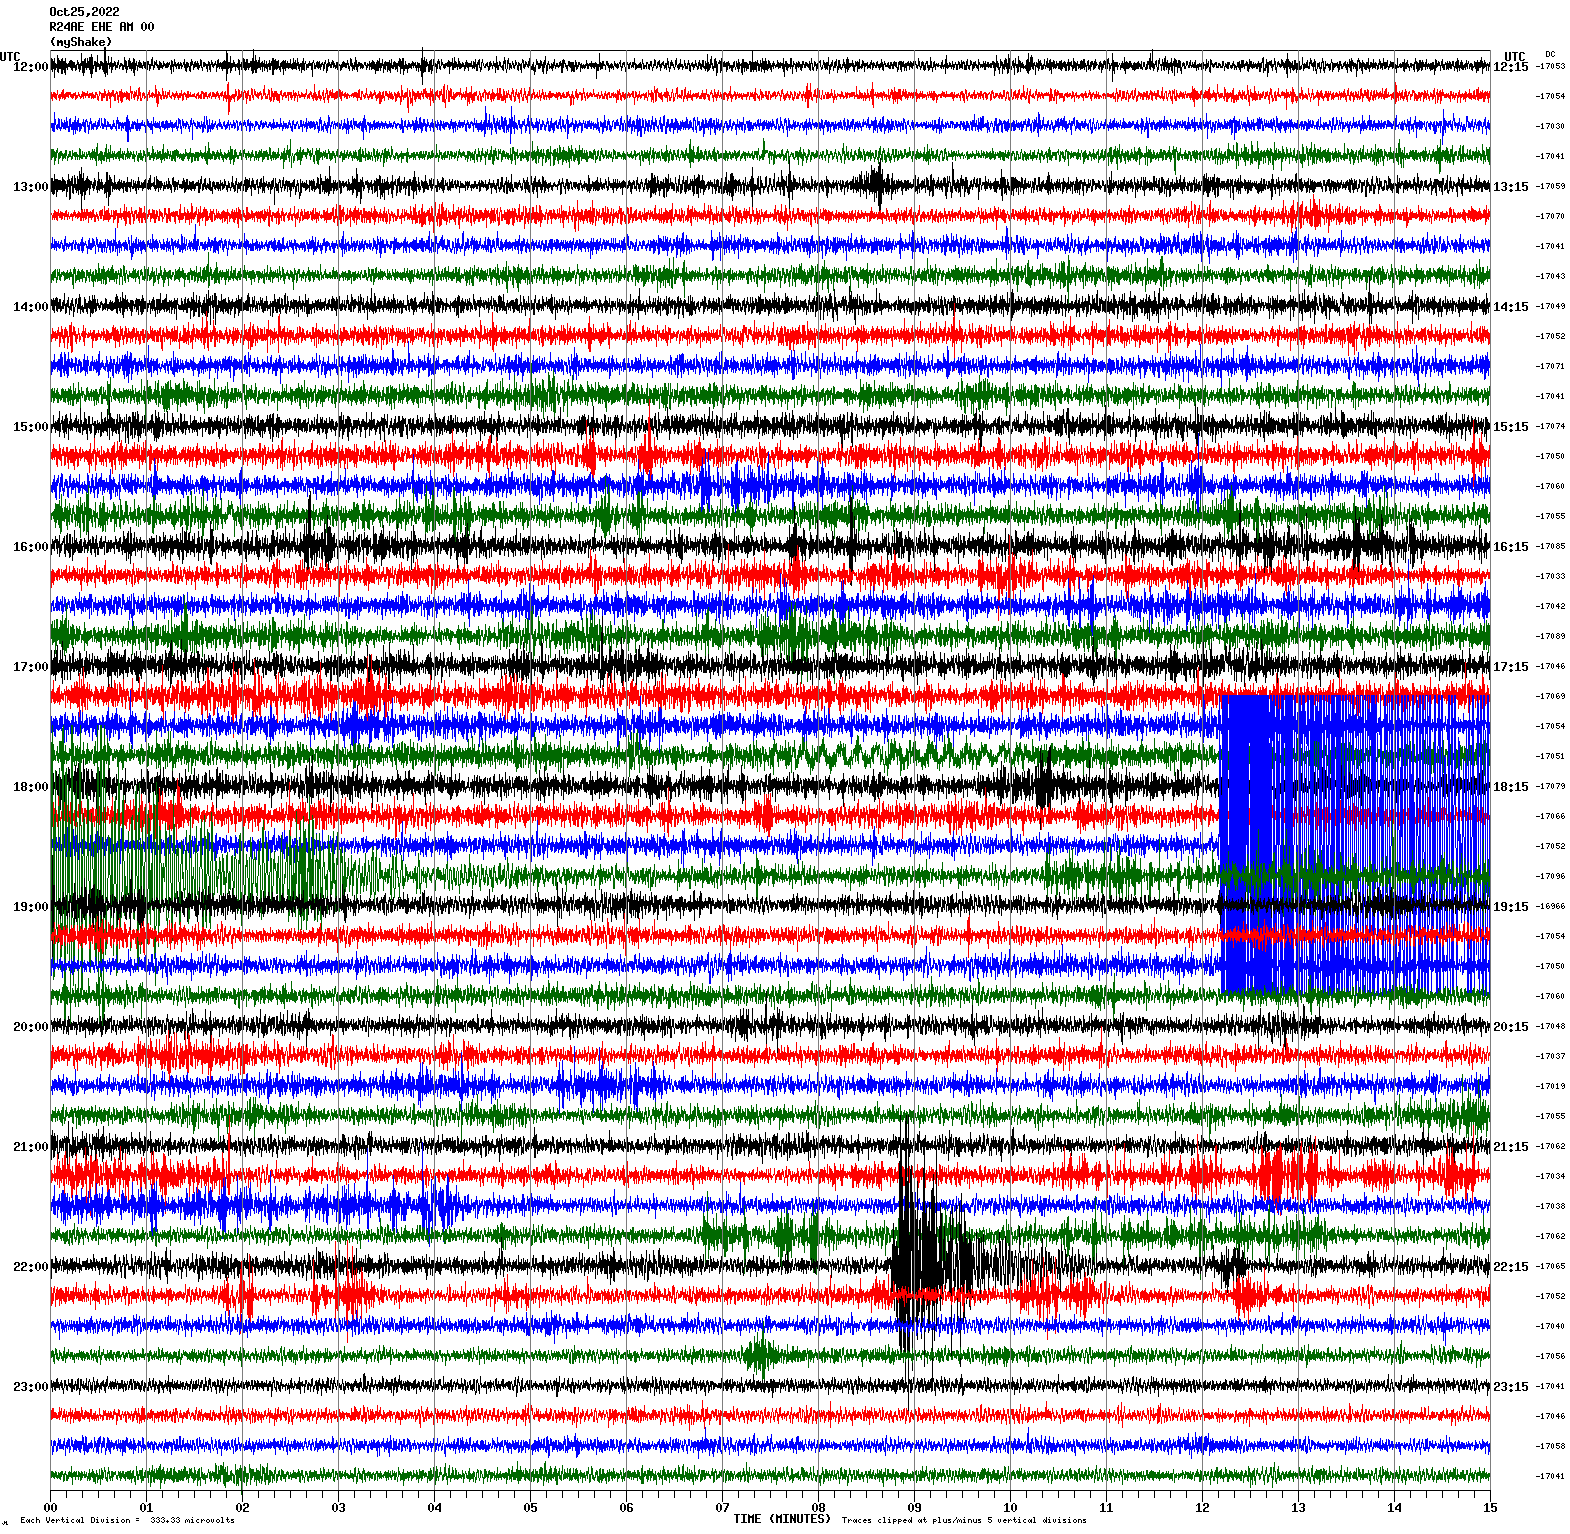 /seismic-data/R24AE/R24AE_EHE_AM_00.2022102512.gif